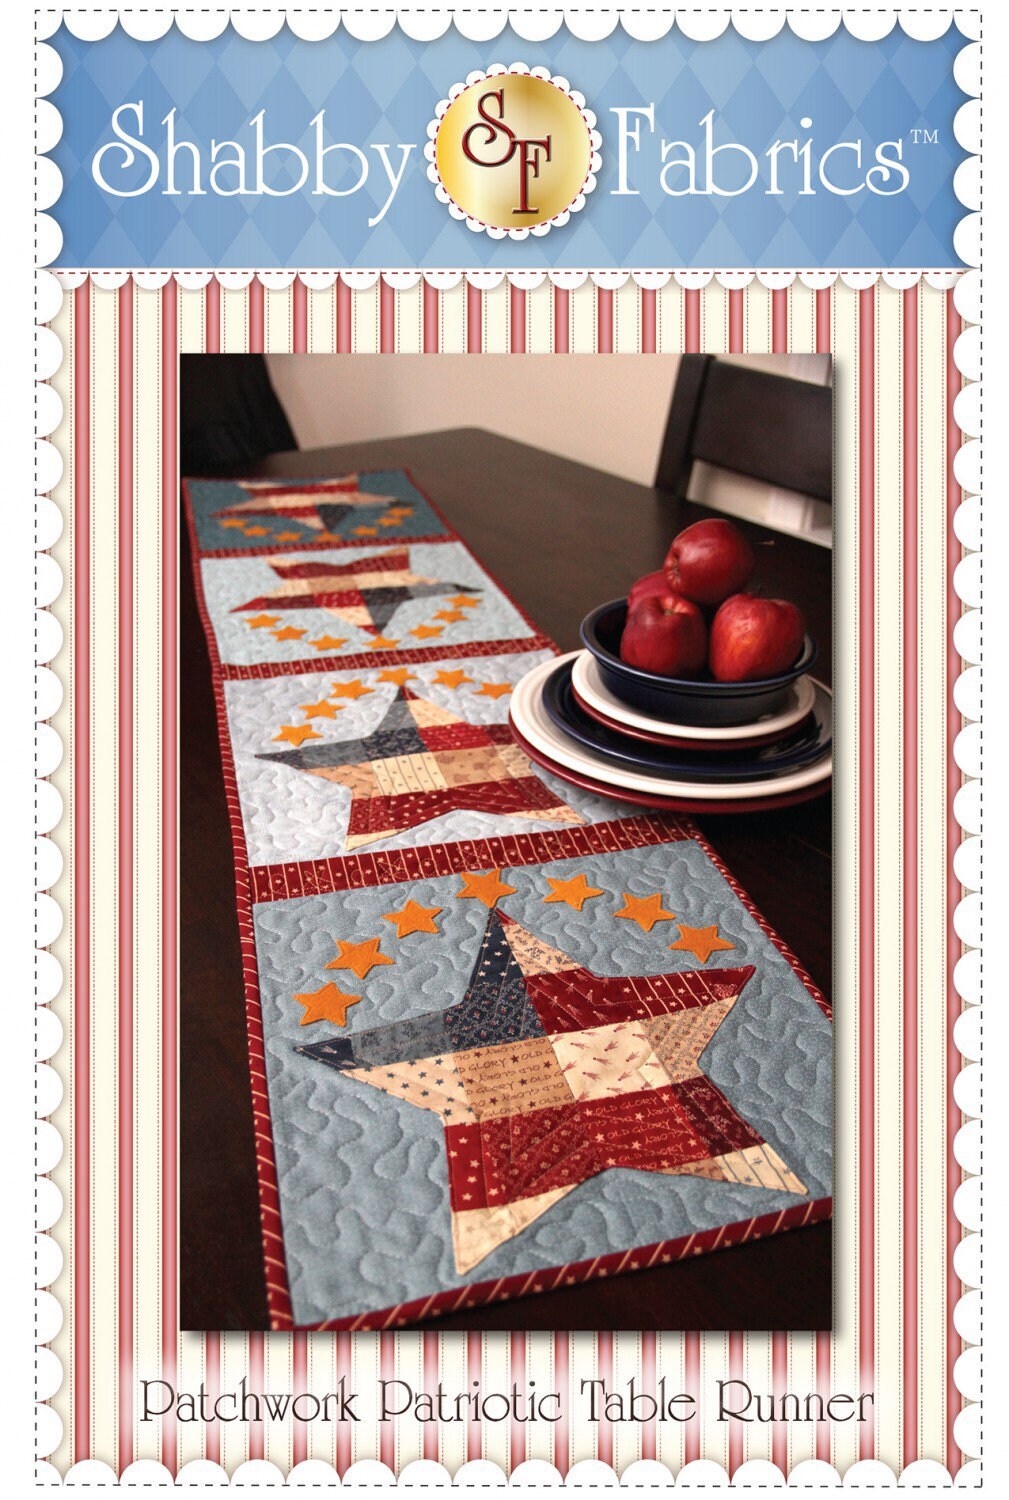 Patchwork Patriotic Table Runner Pattern - Shabby Fabrics - Jennifer Bosworth - 4th of July Table Runner Pattern